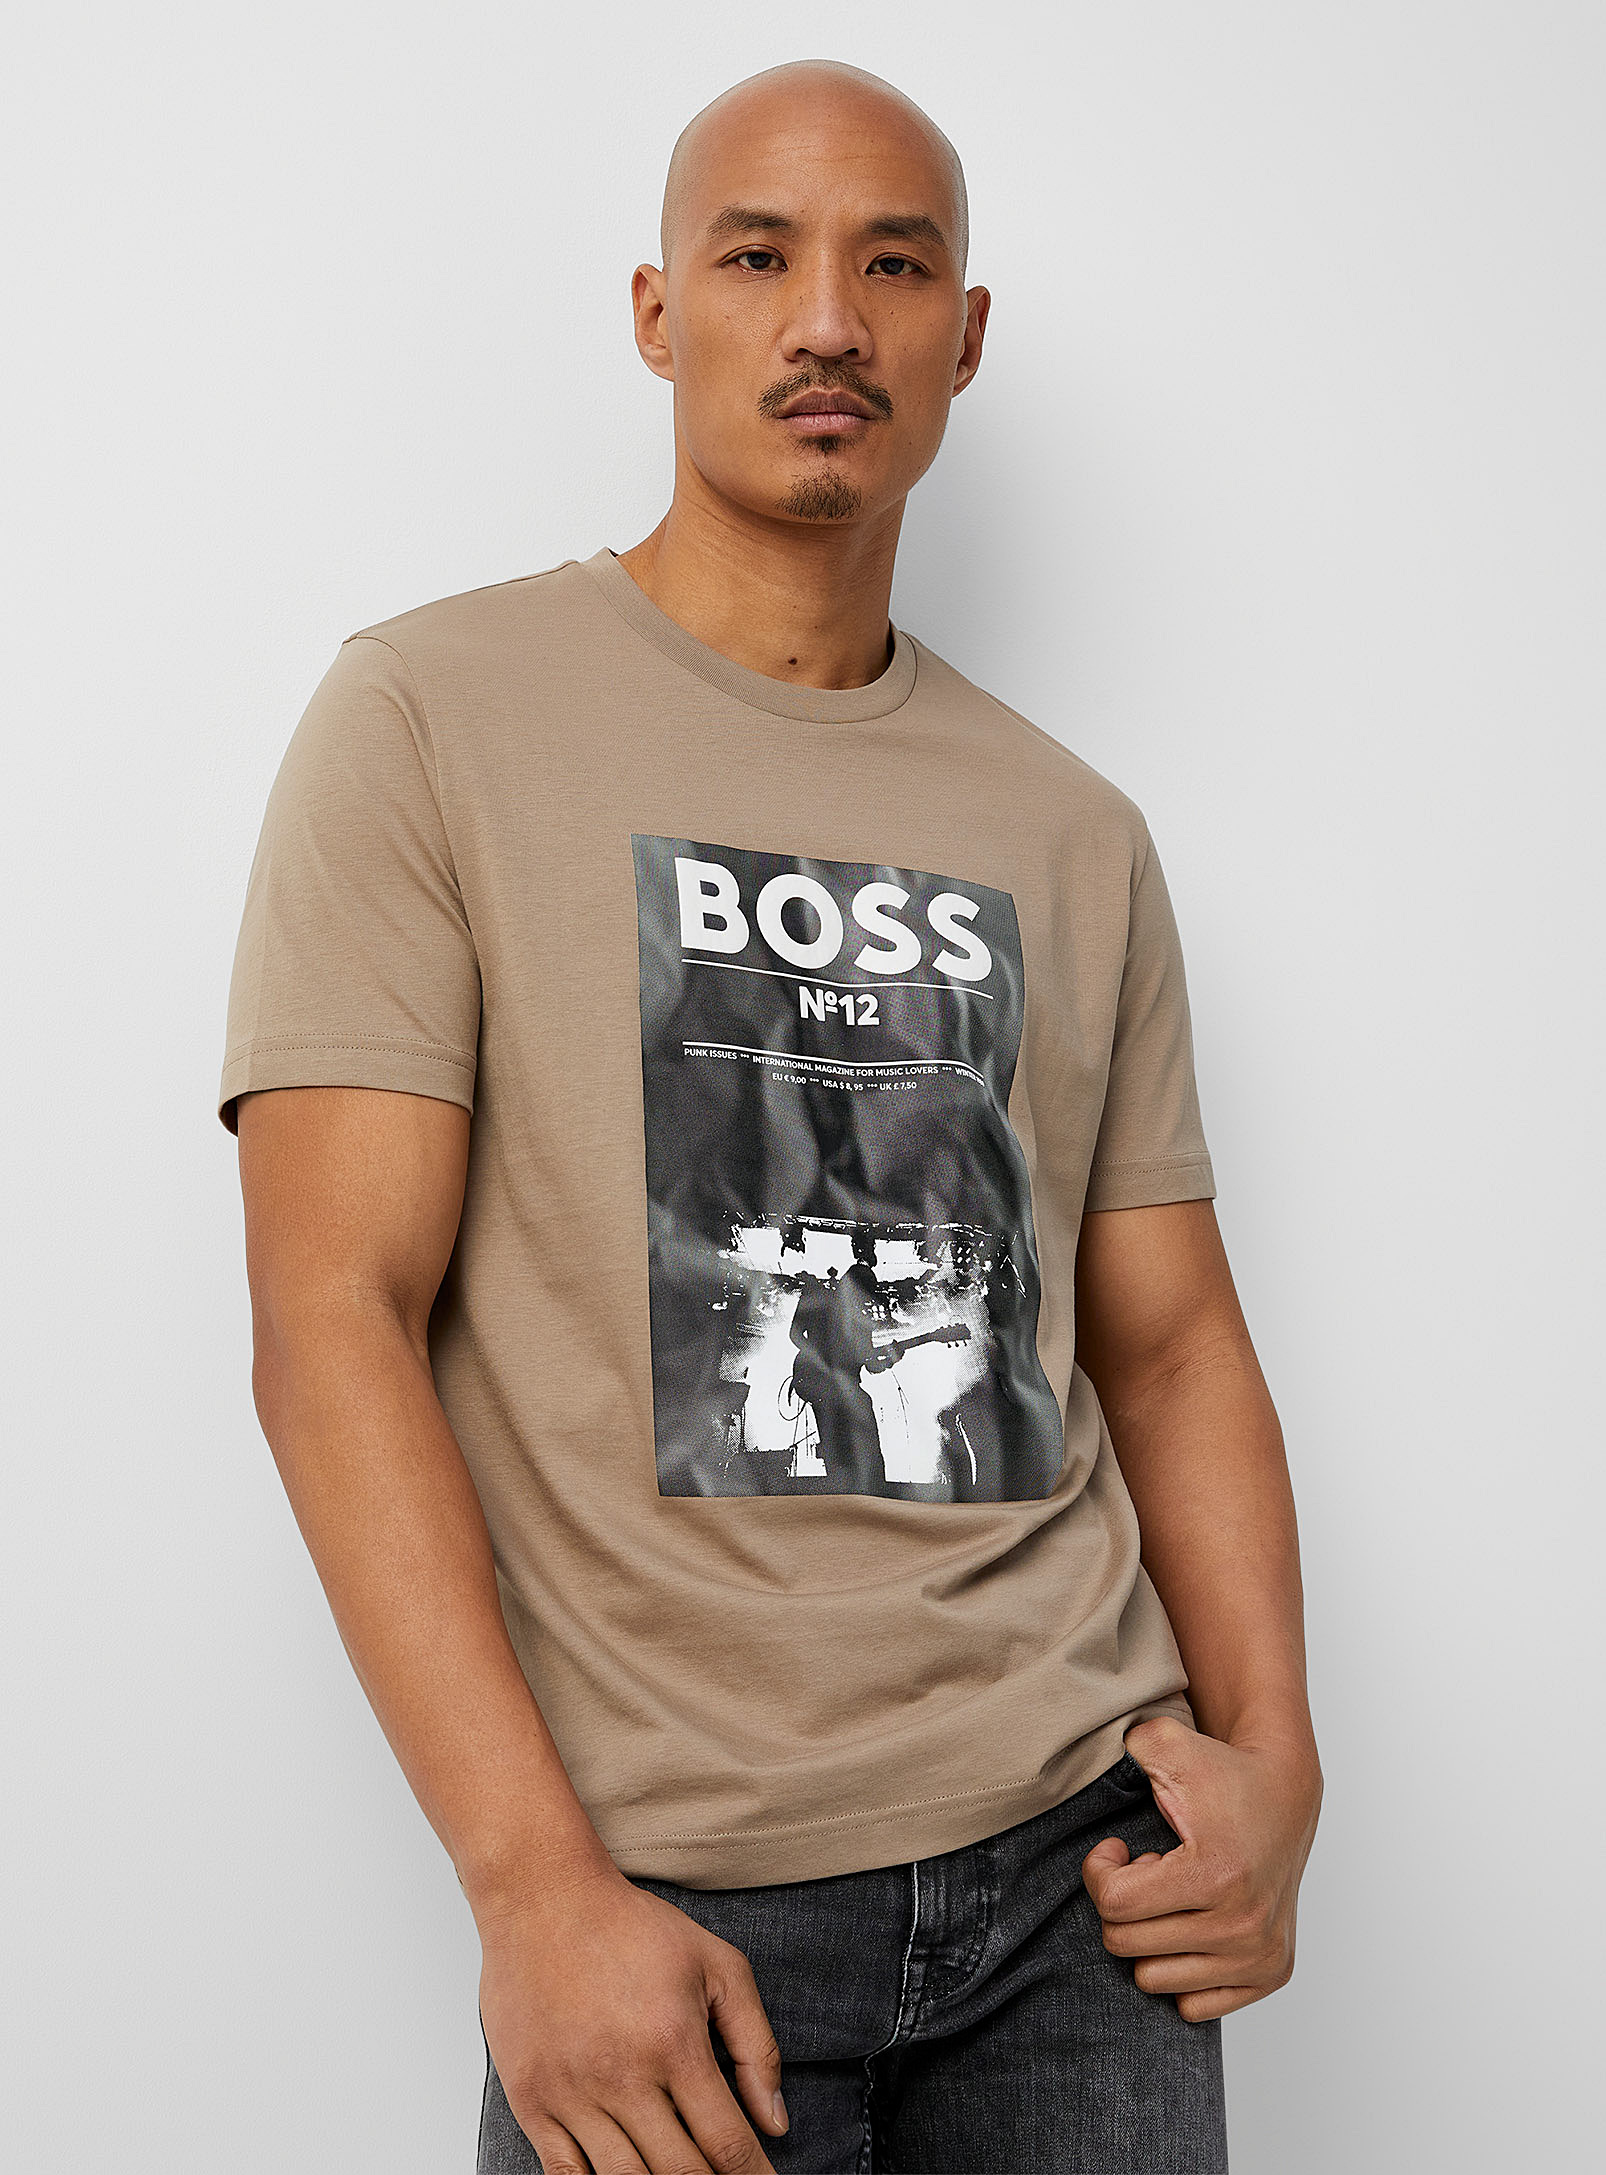 Boss - Le t-shirt No 12